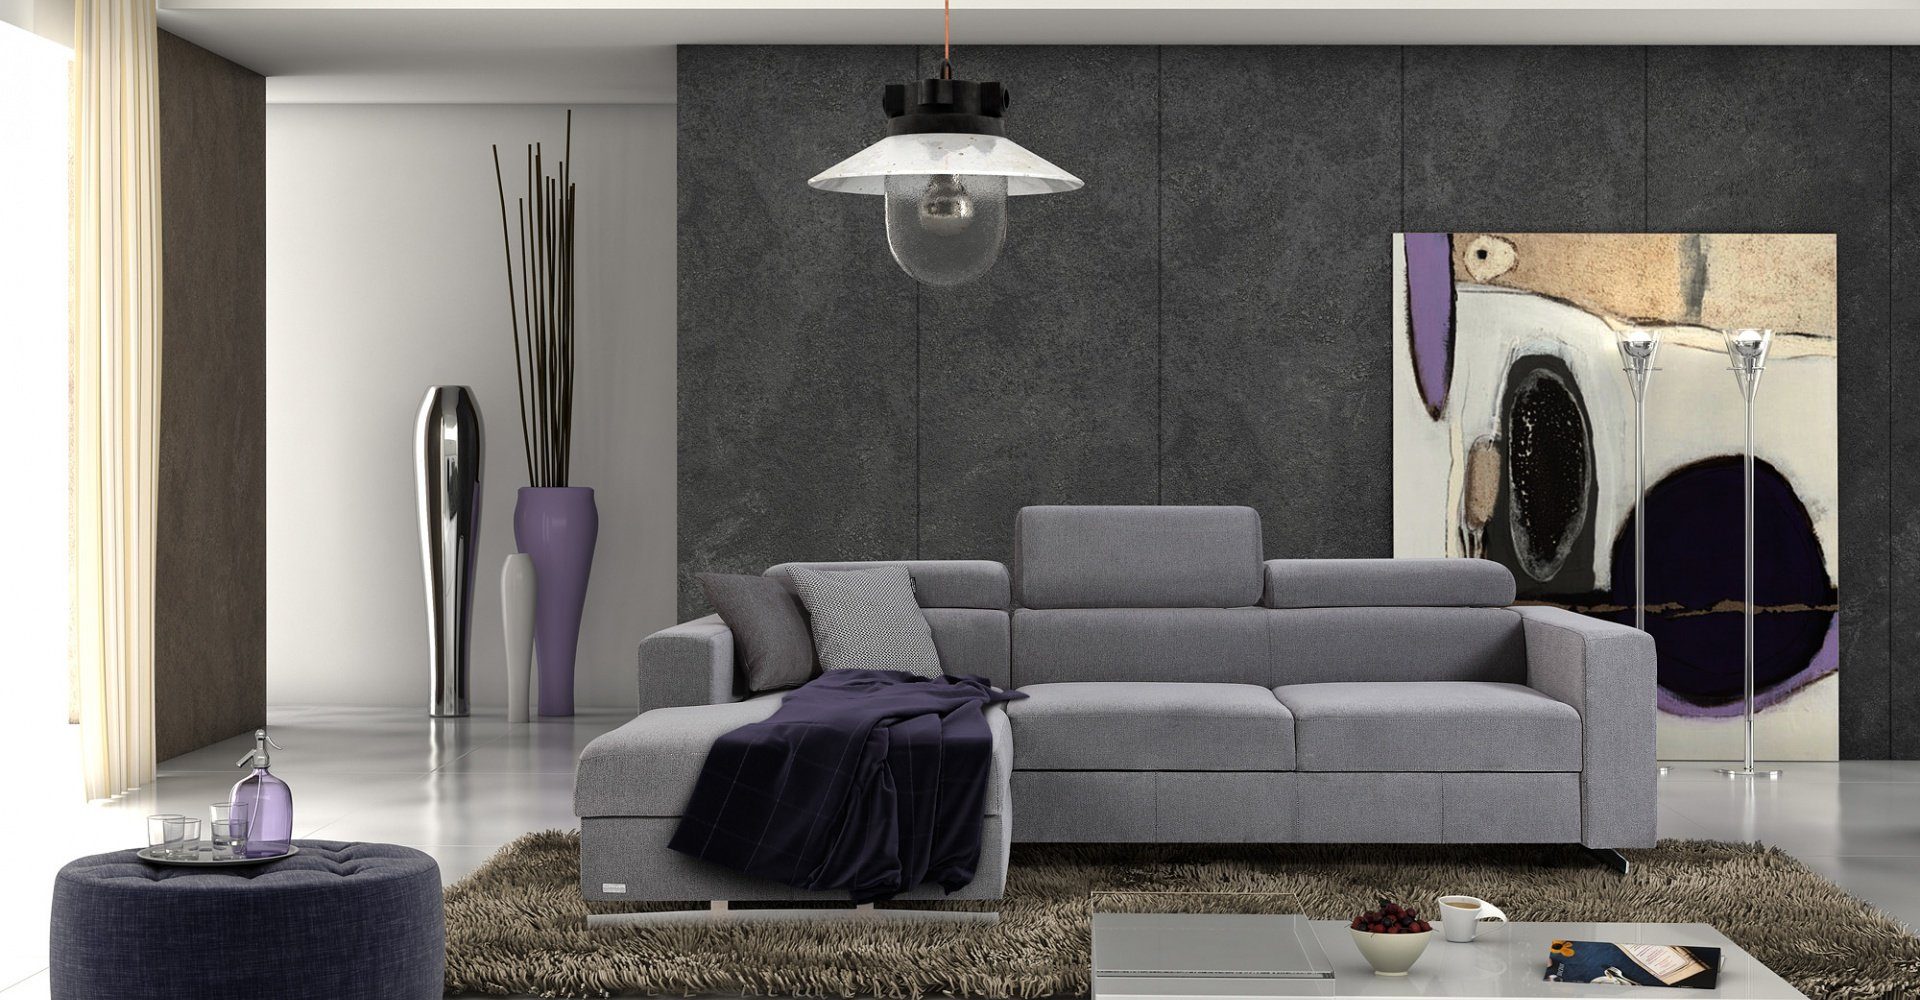 JVmoebel Ecksofa Ecksofa L-Form Bettfunktion, Made Design Europe Polster Modern in Couch Textil